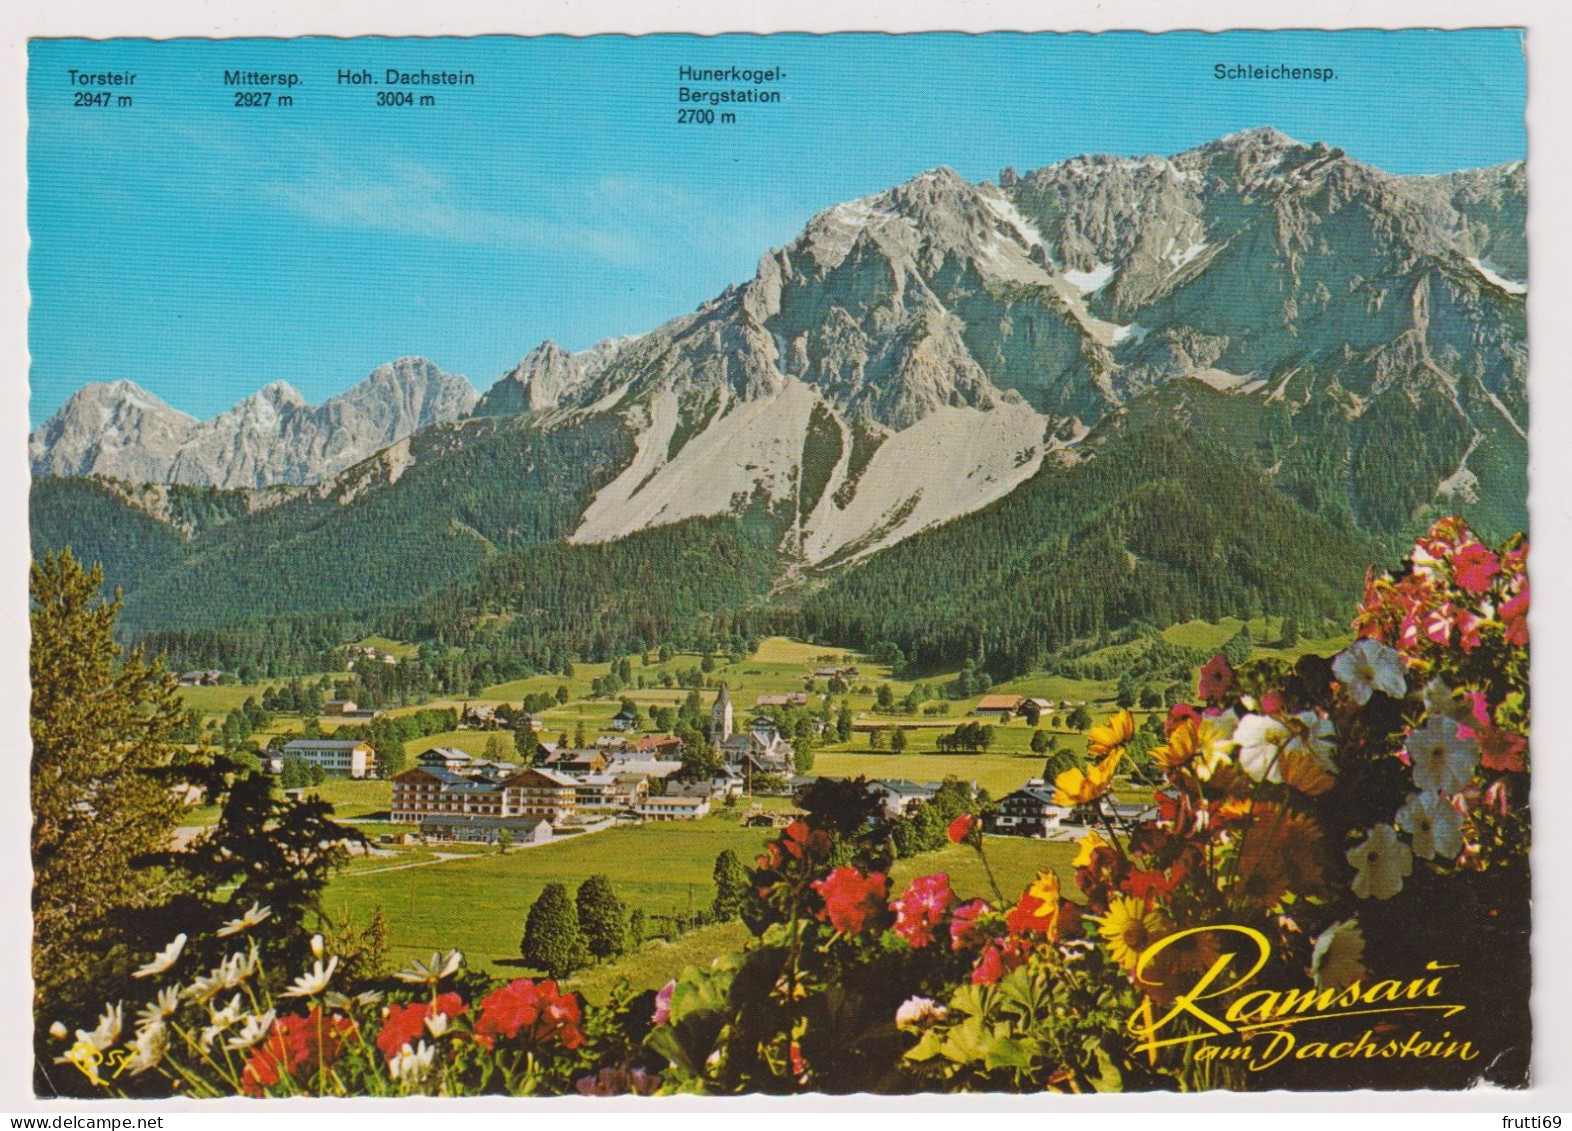 AK 199996 AUSTRIA - Ramsau Am Dachstein - Ramsau Am Dachstein